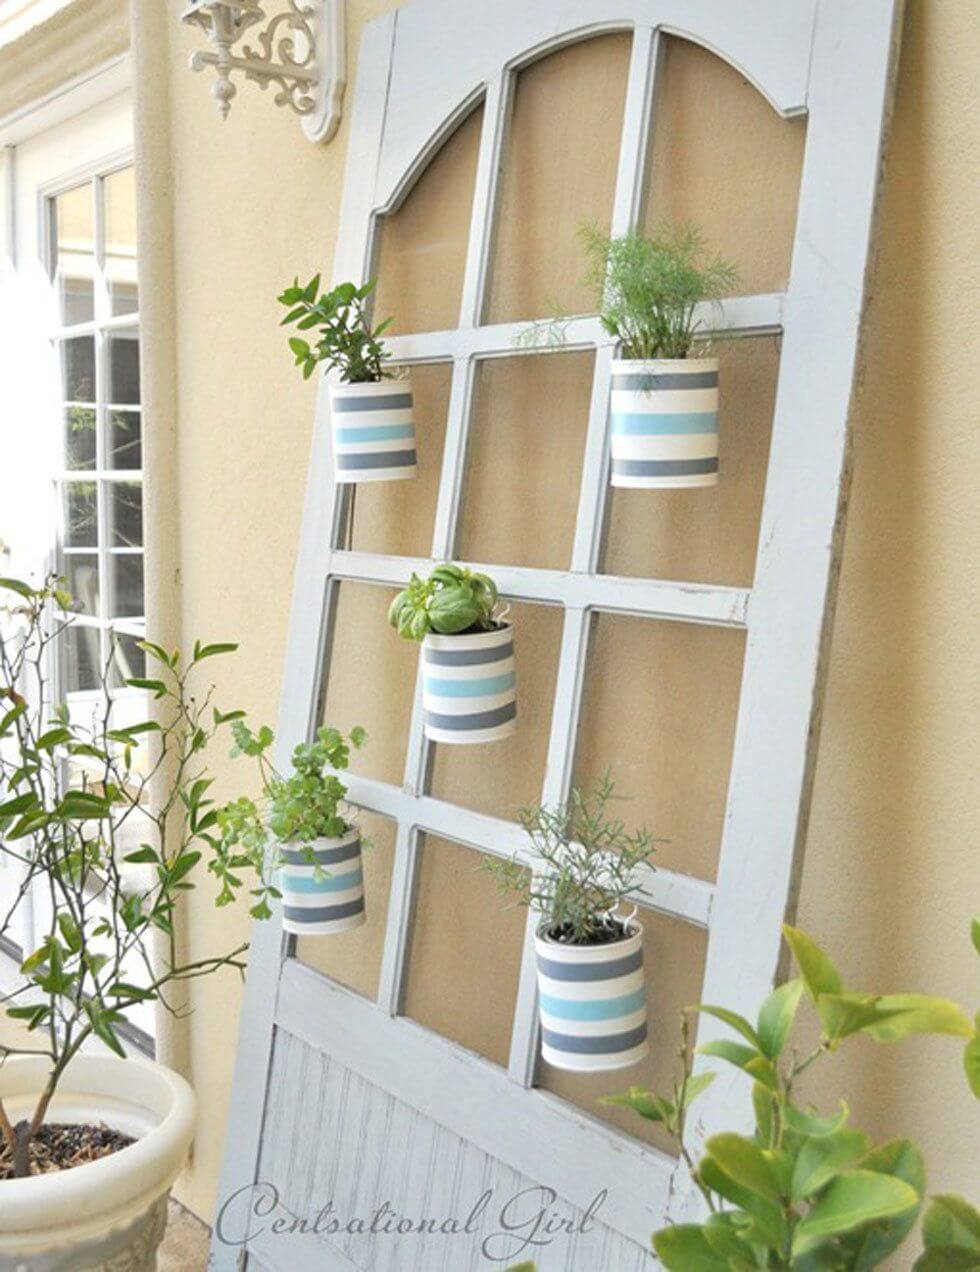 Hang Herb Pots in the Windows